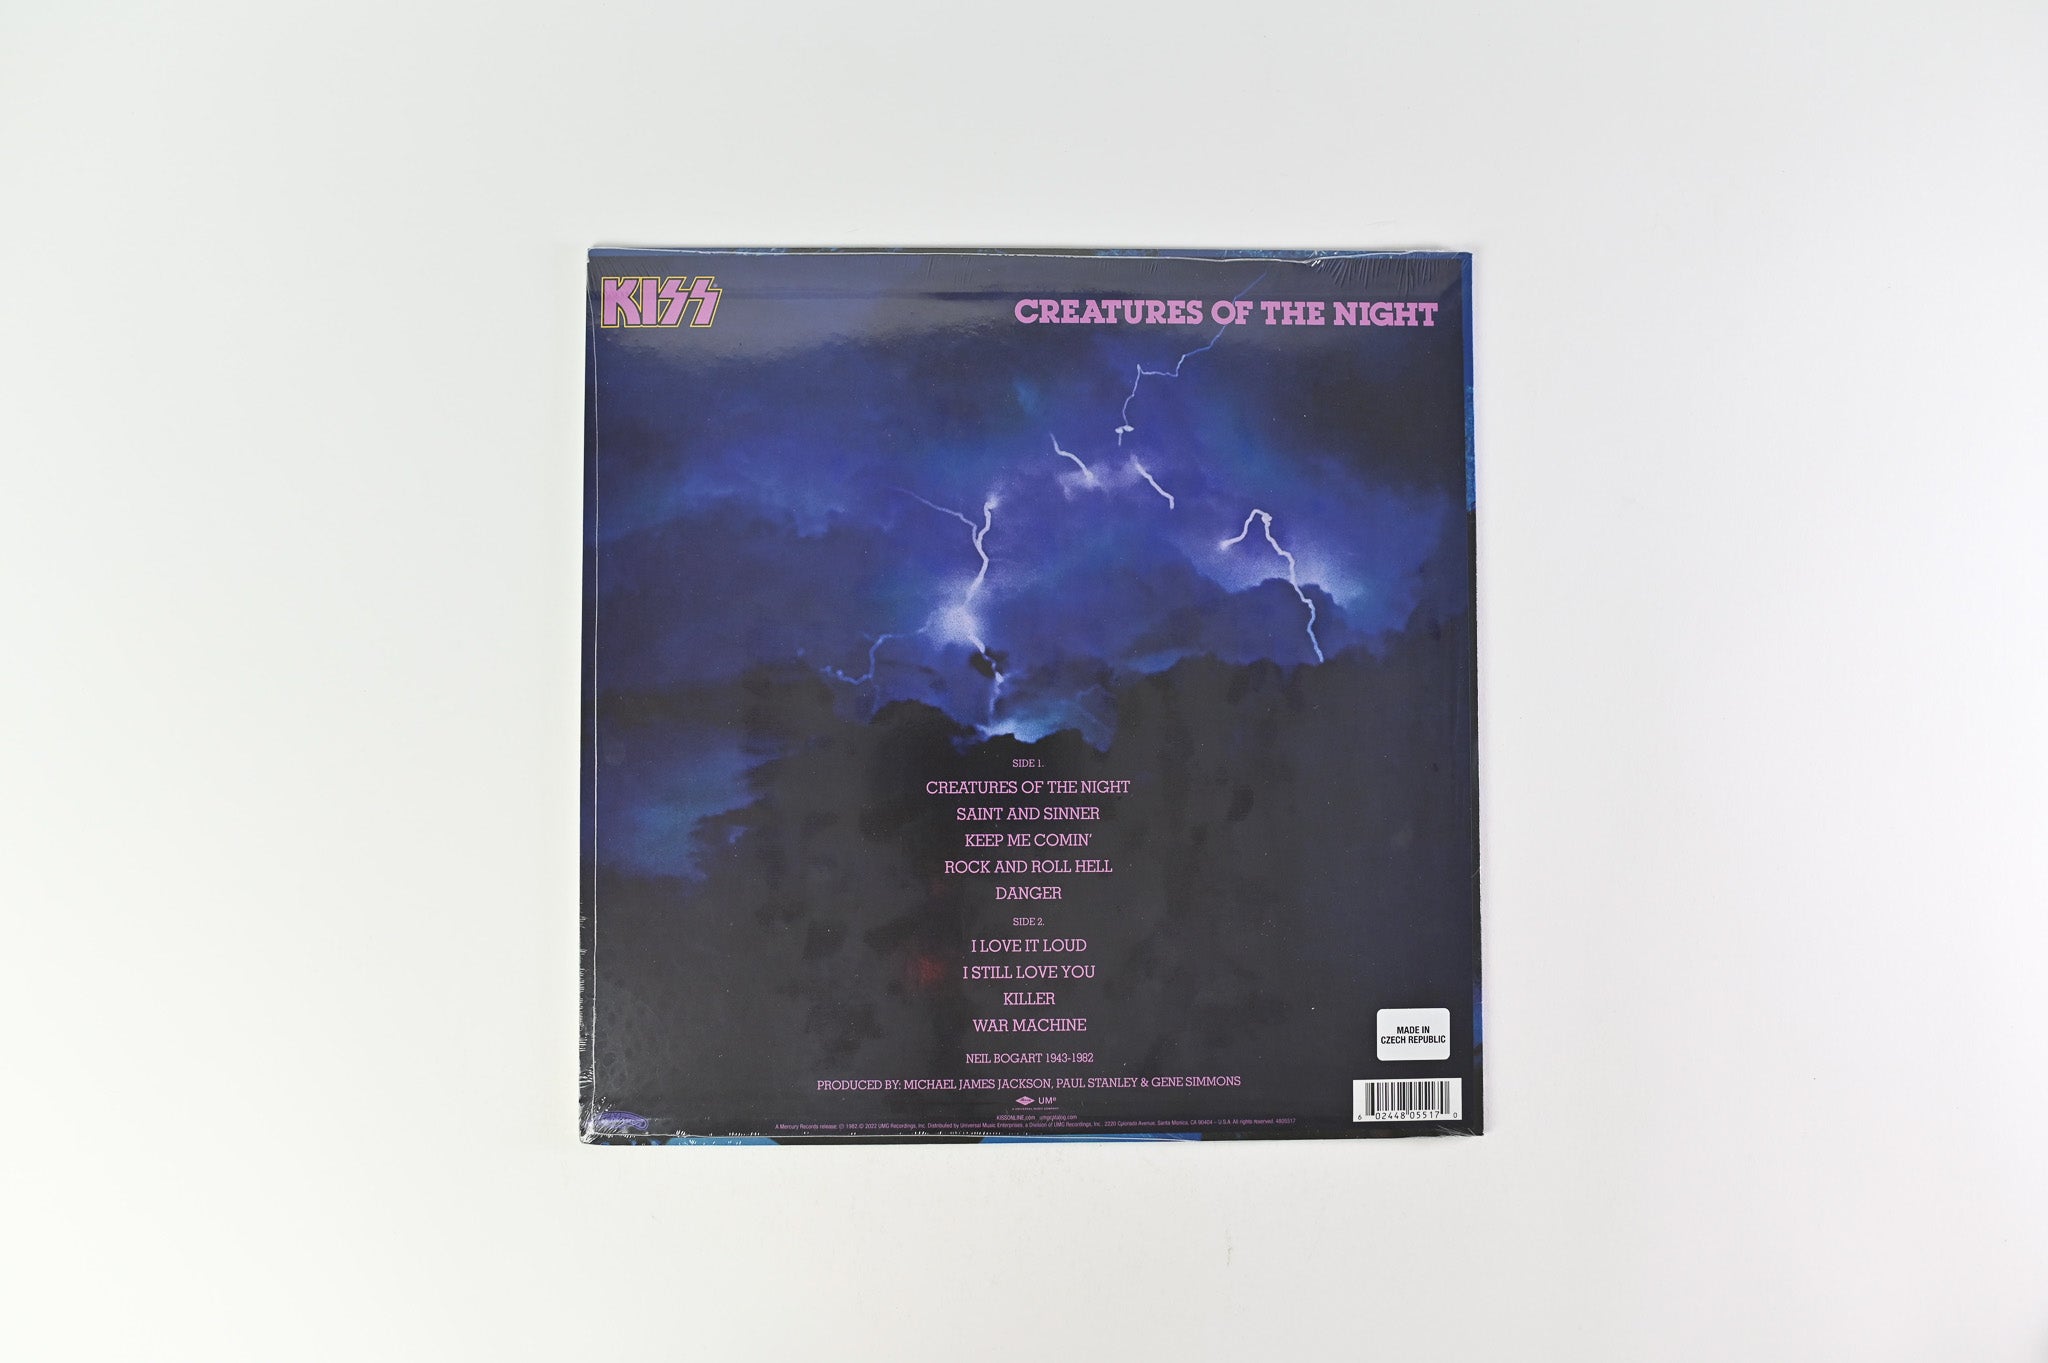 Kiss - Creatures Of The Night on Mercury / Casablanca / UMe - Sealed Half Speed Mastered